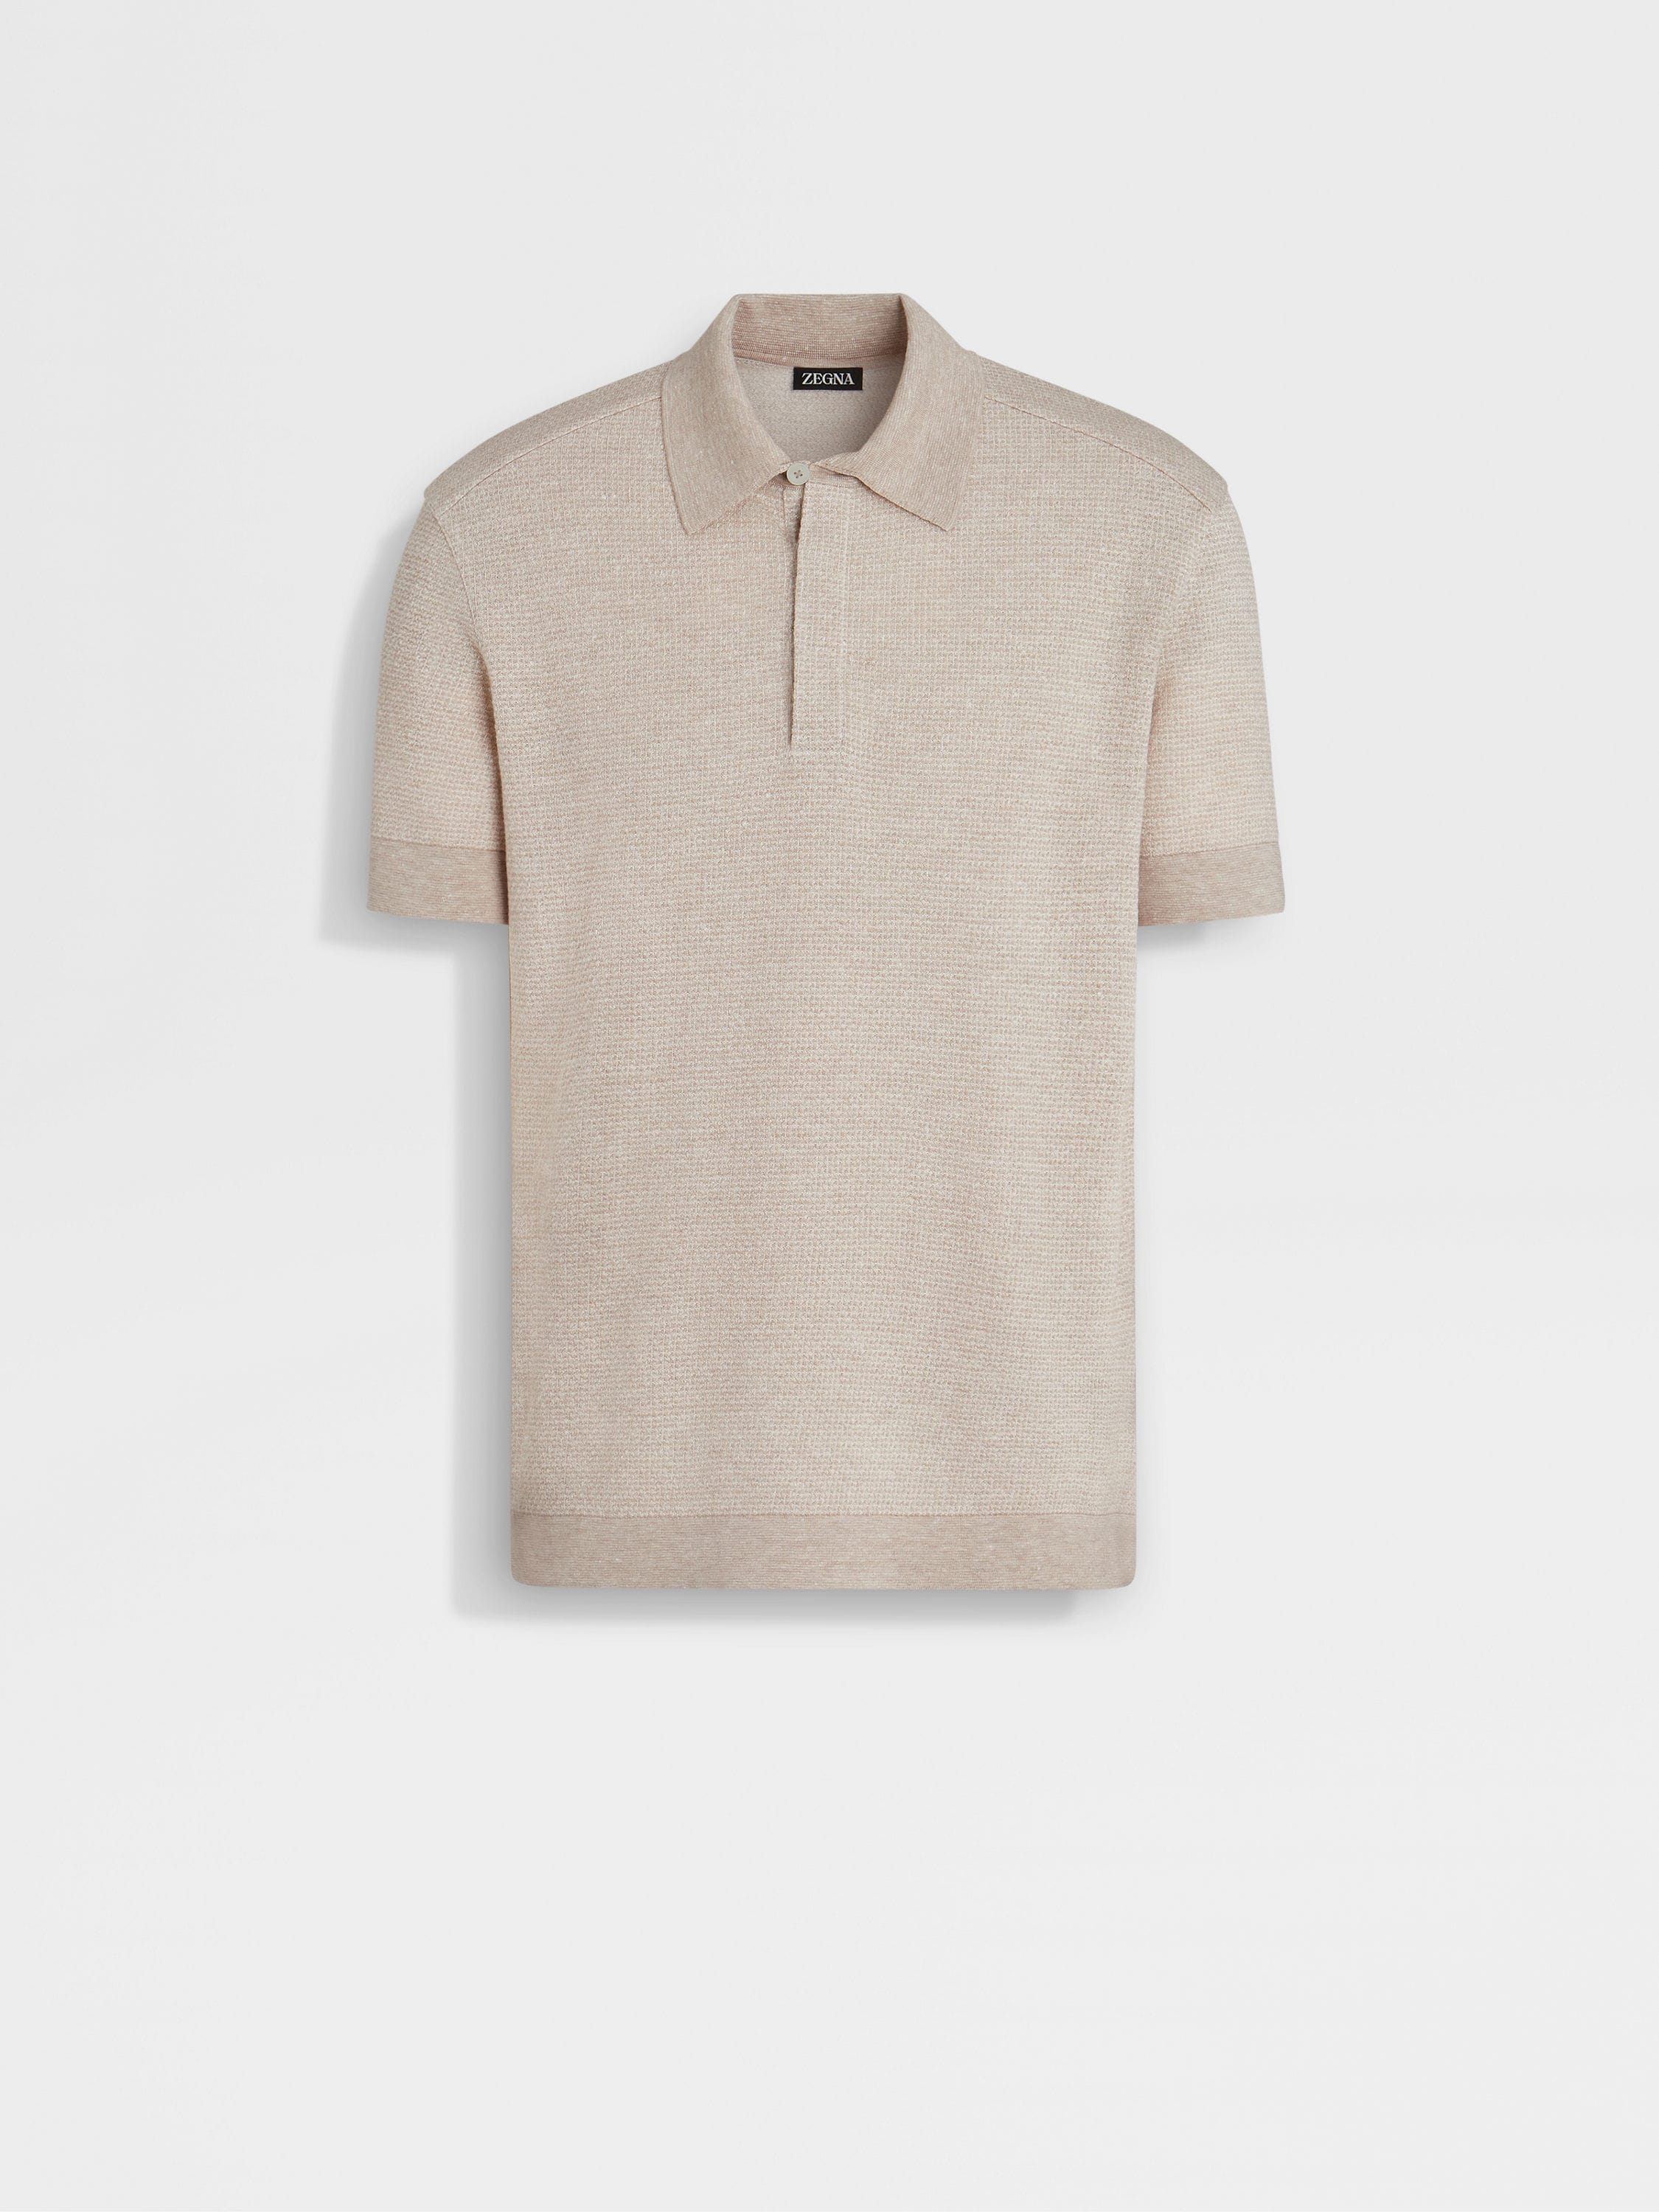 Grey Mélange Cotton Linen and Silk Polo Shirt SS24 30009329 | Zegna US